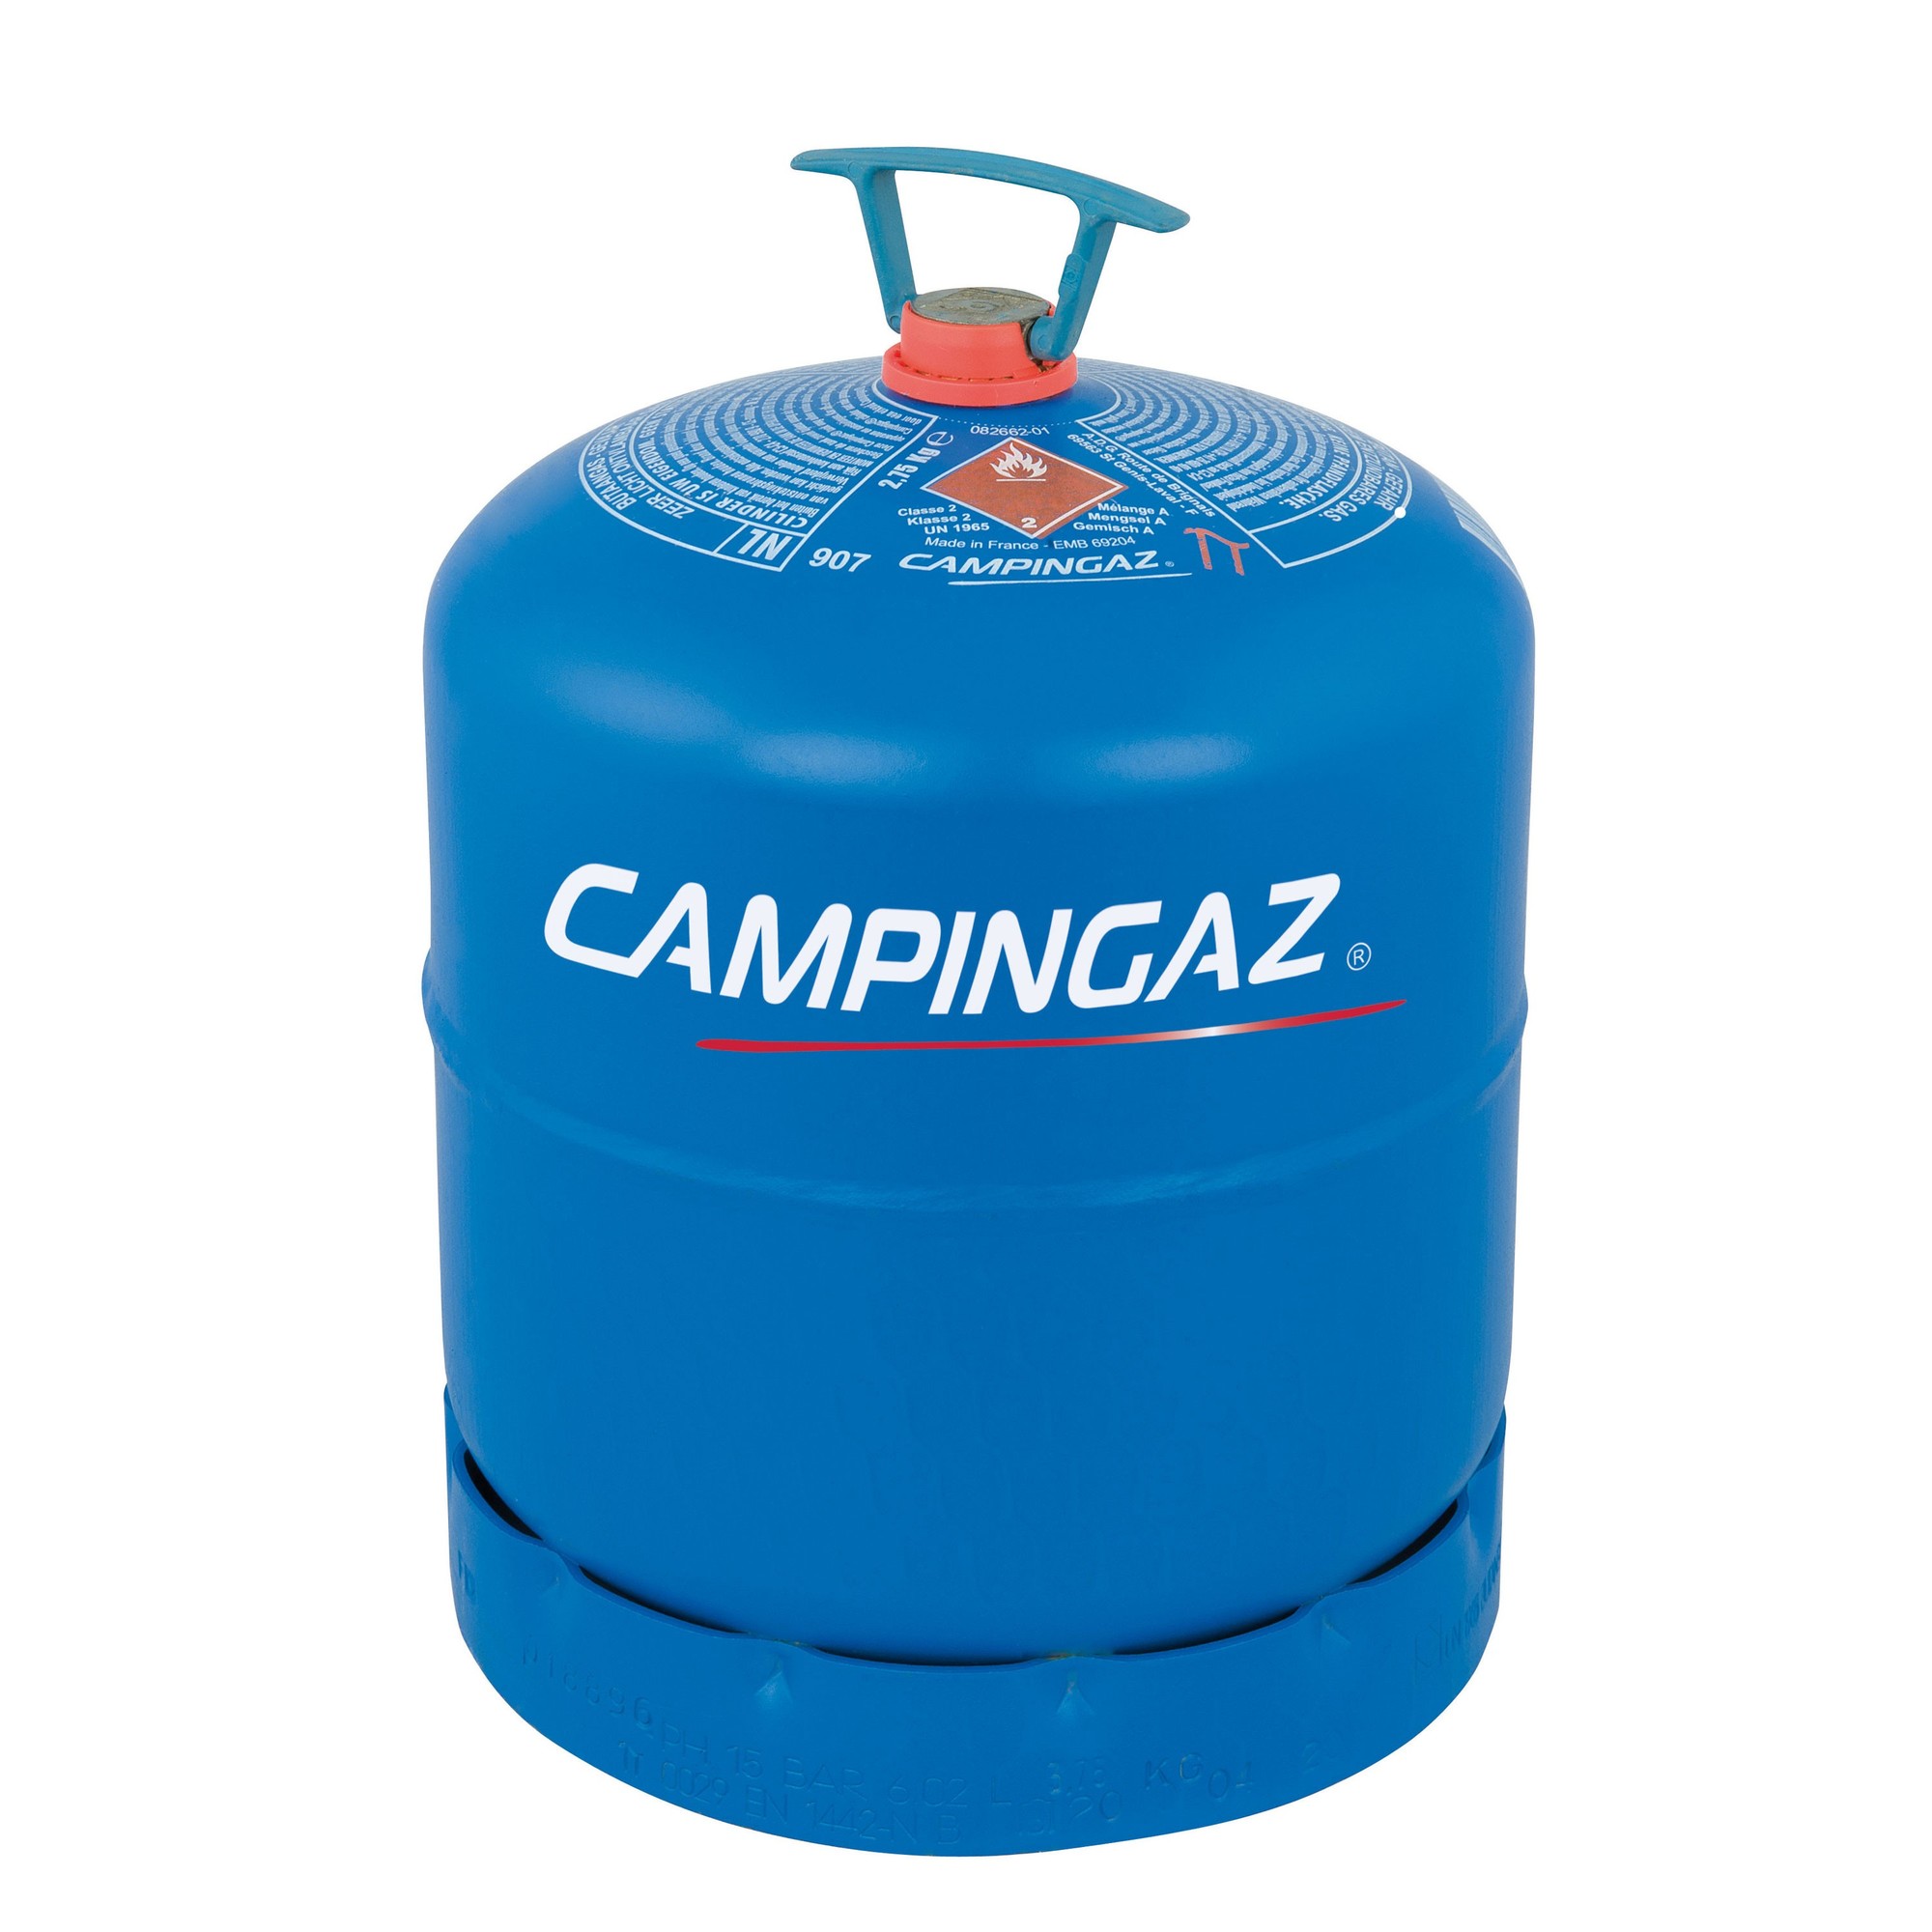 Кемпинг баллоны. Campingaz р 907. Газовый баллон Campingaz. Campingaz r909. Campingaz баллоны для автодома.